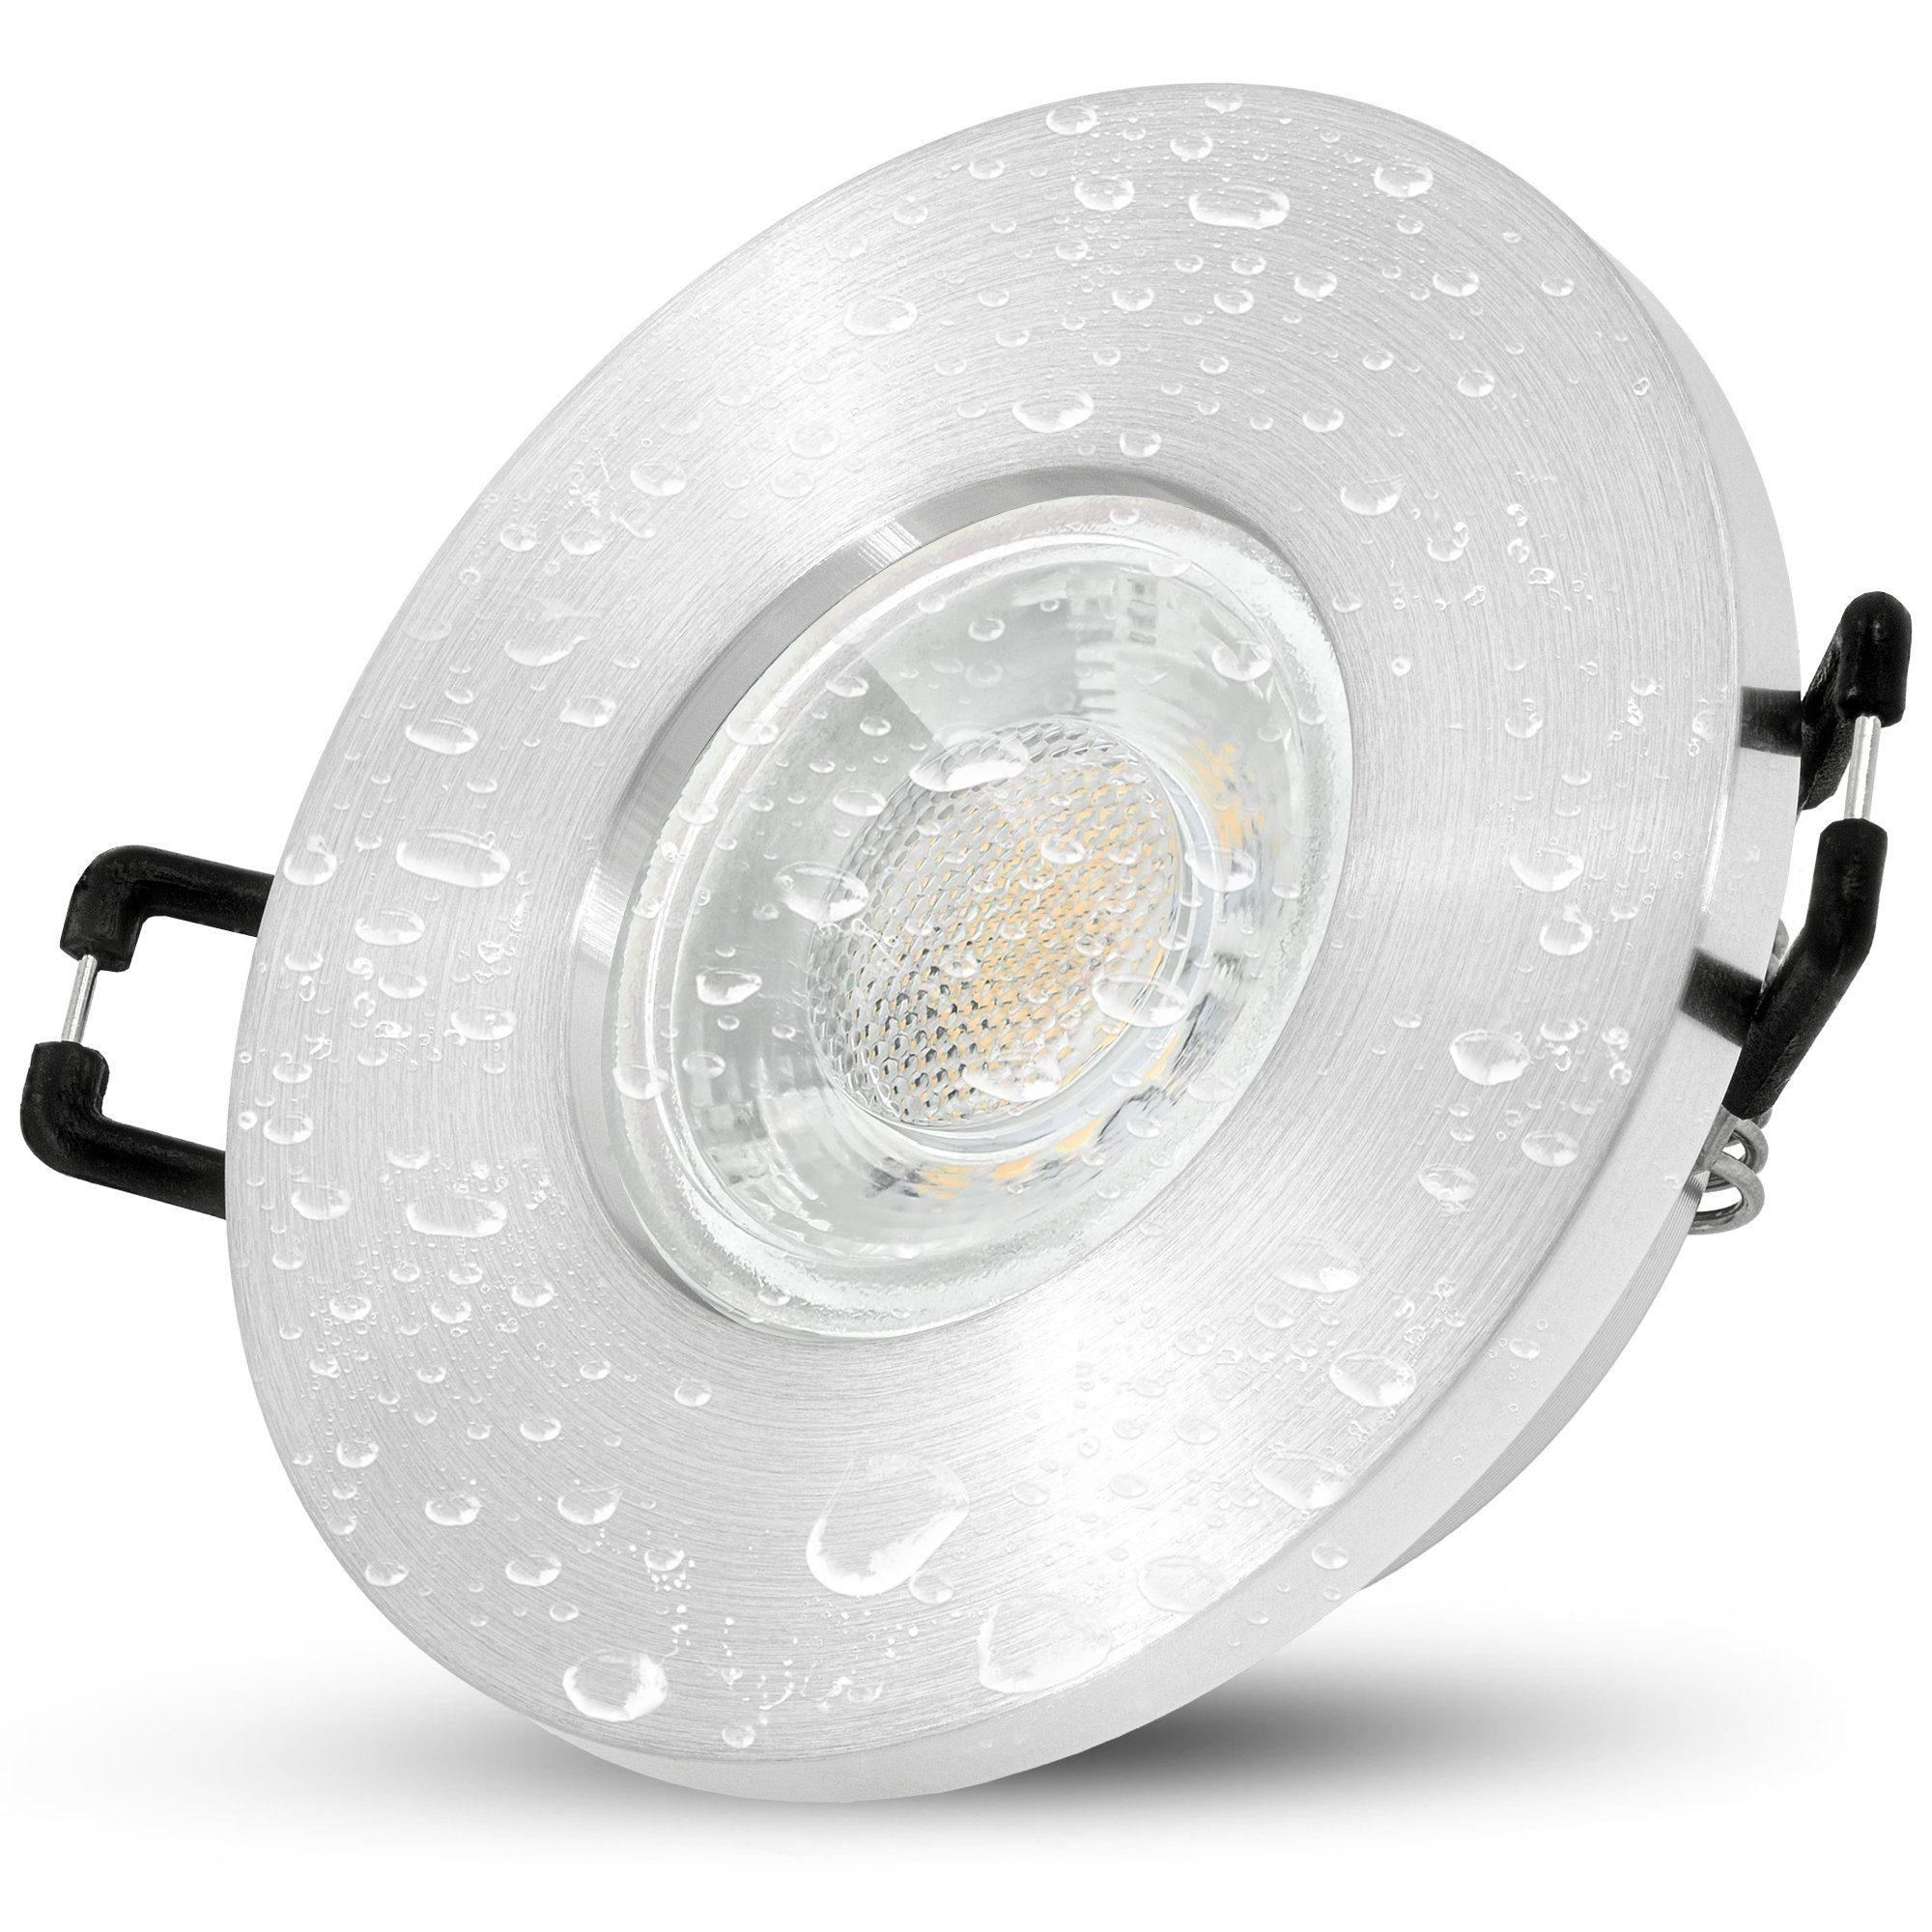 linovum LED 6W Bad inklusive warmweiss inklusive, Leuchtmittel Einbaustrahler LED IP65 230V, Einbaustrahler Leuchtmittel GU10